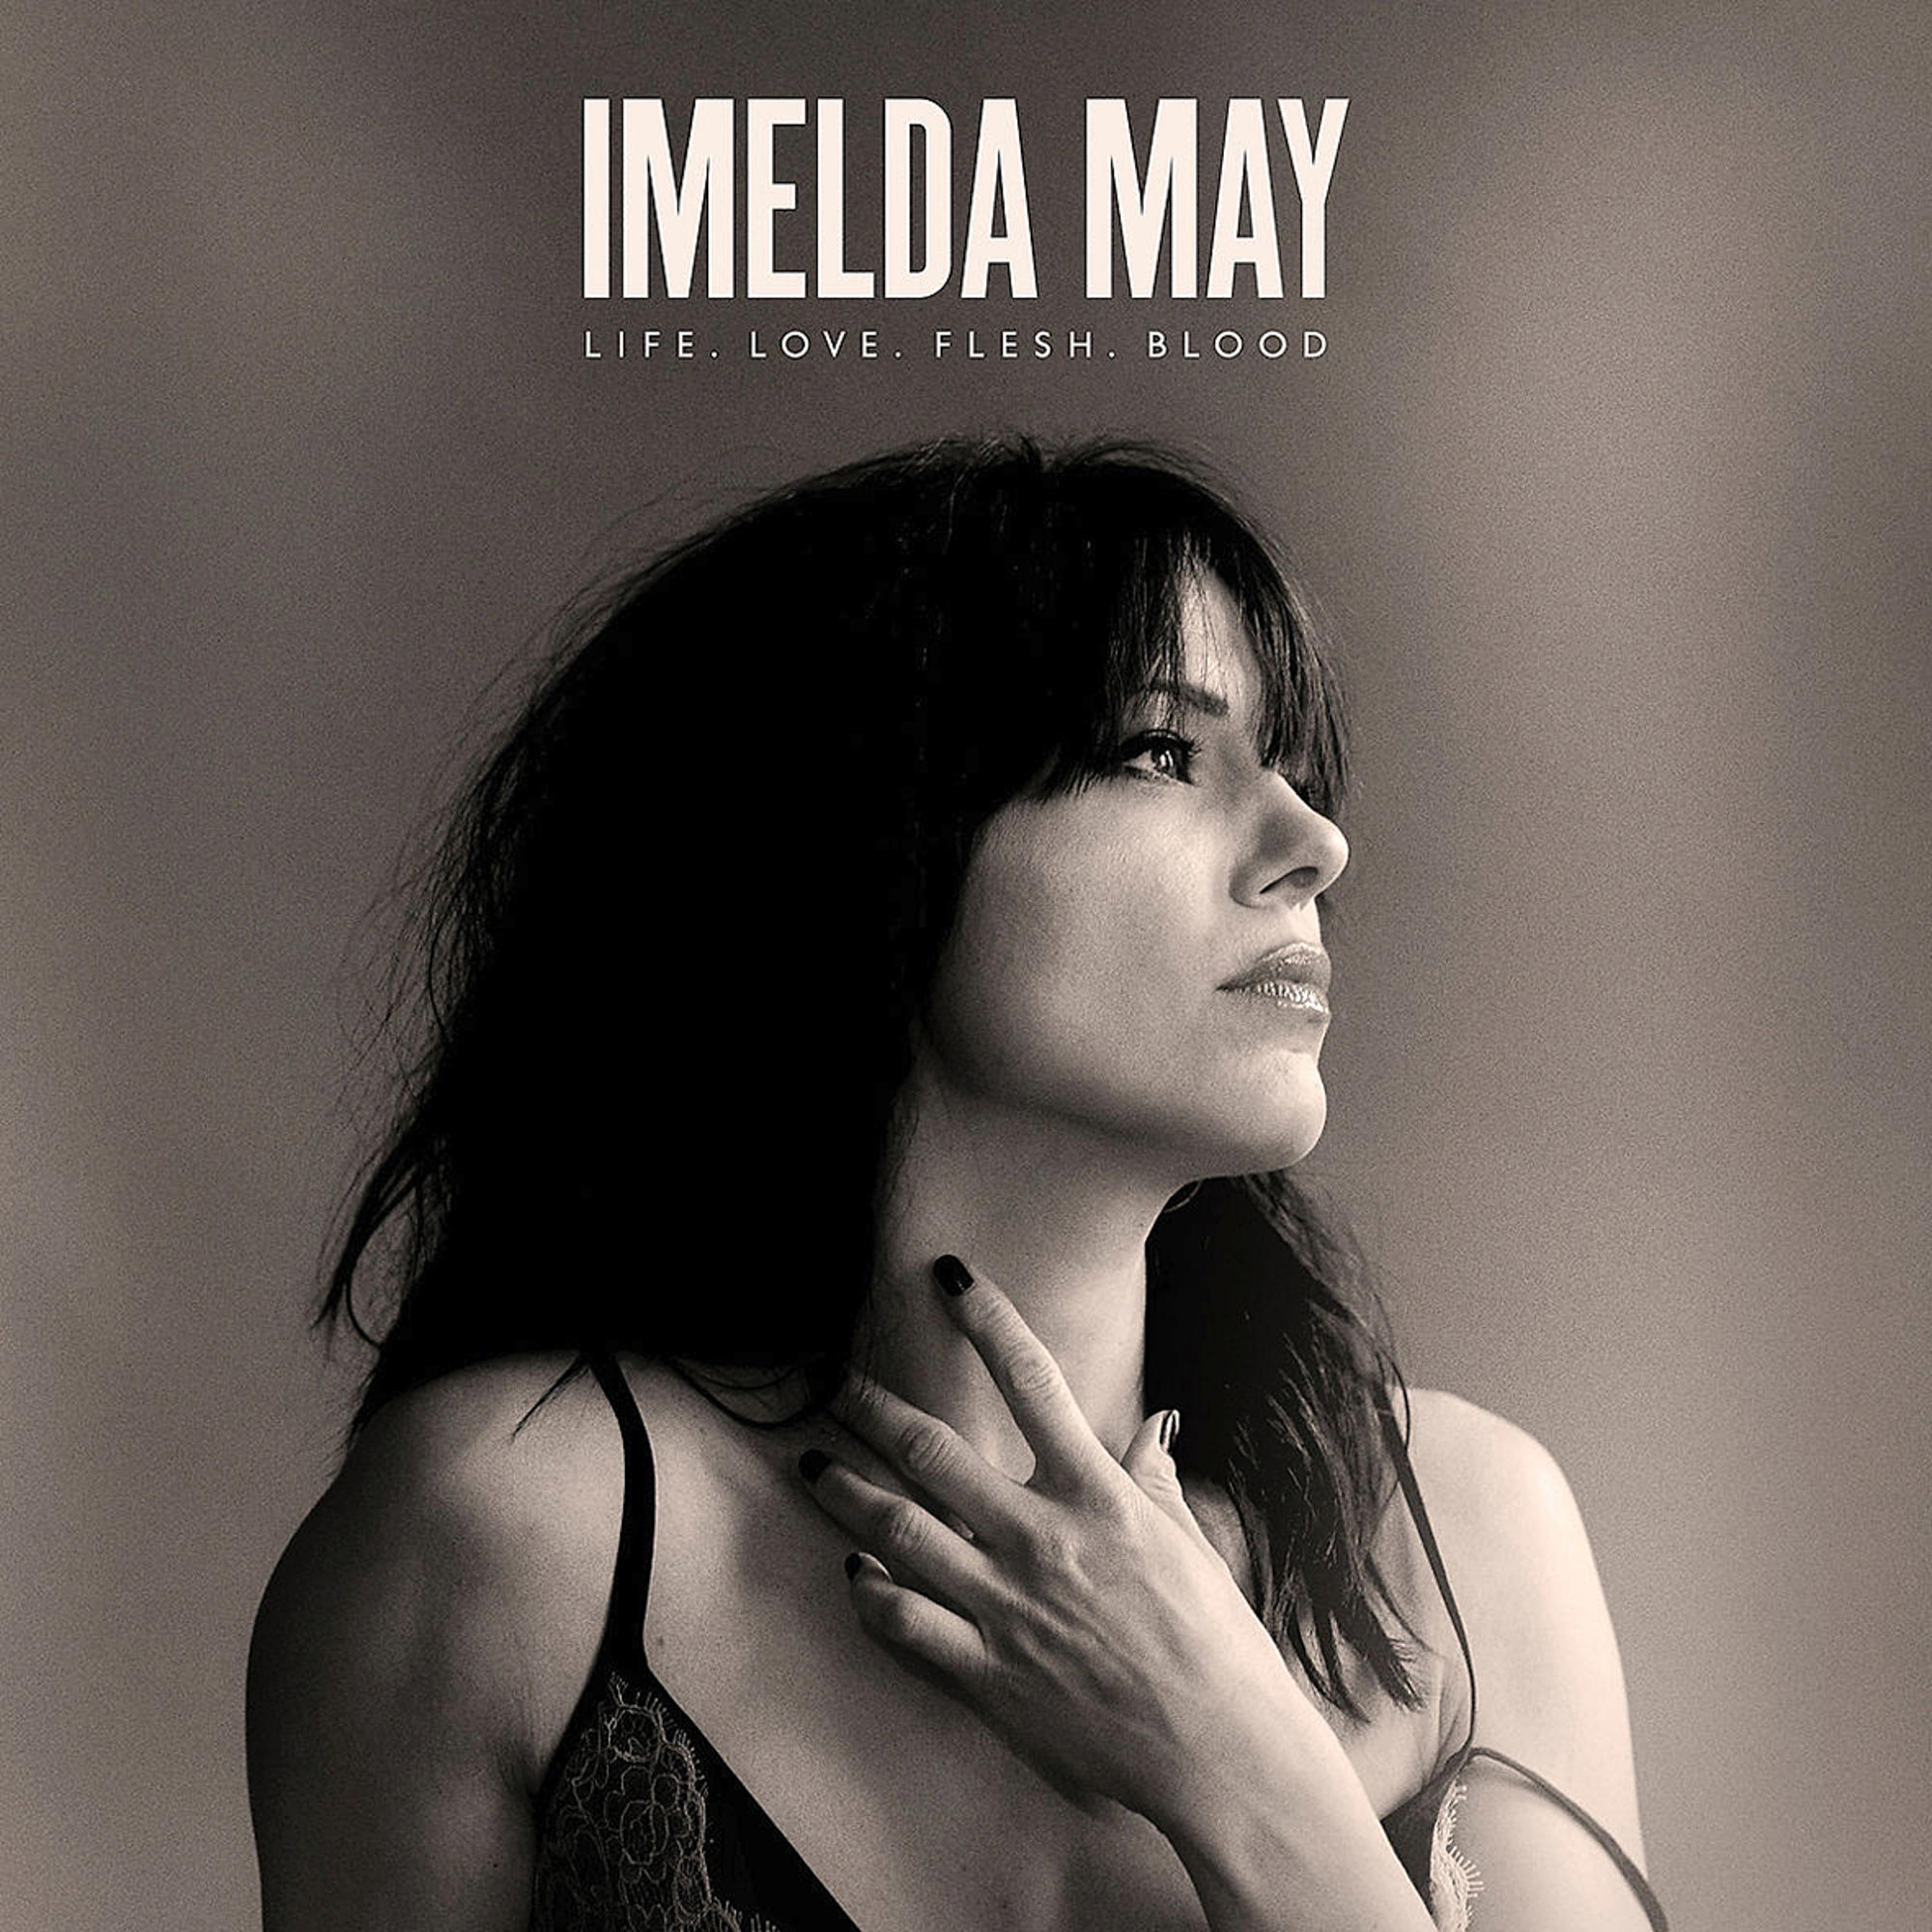 BLOOD LIFE Imelda FLESH - LOVE - May (CD)